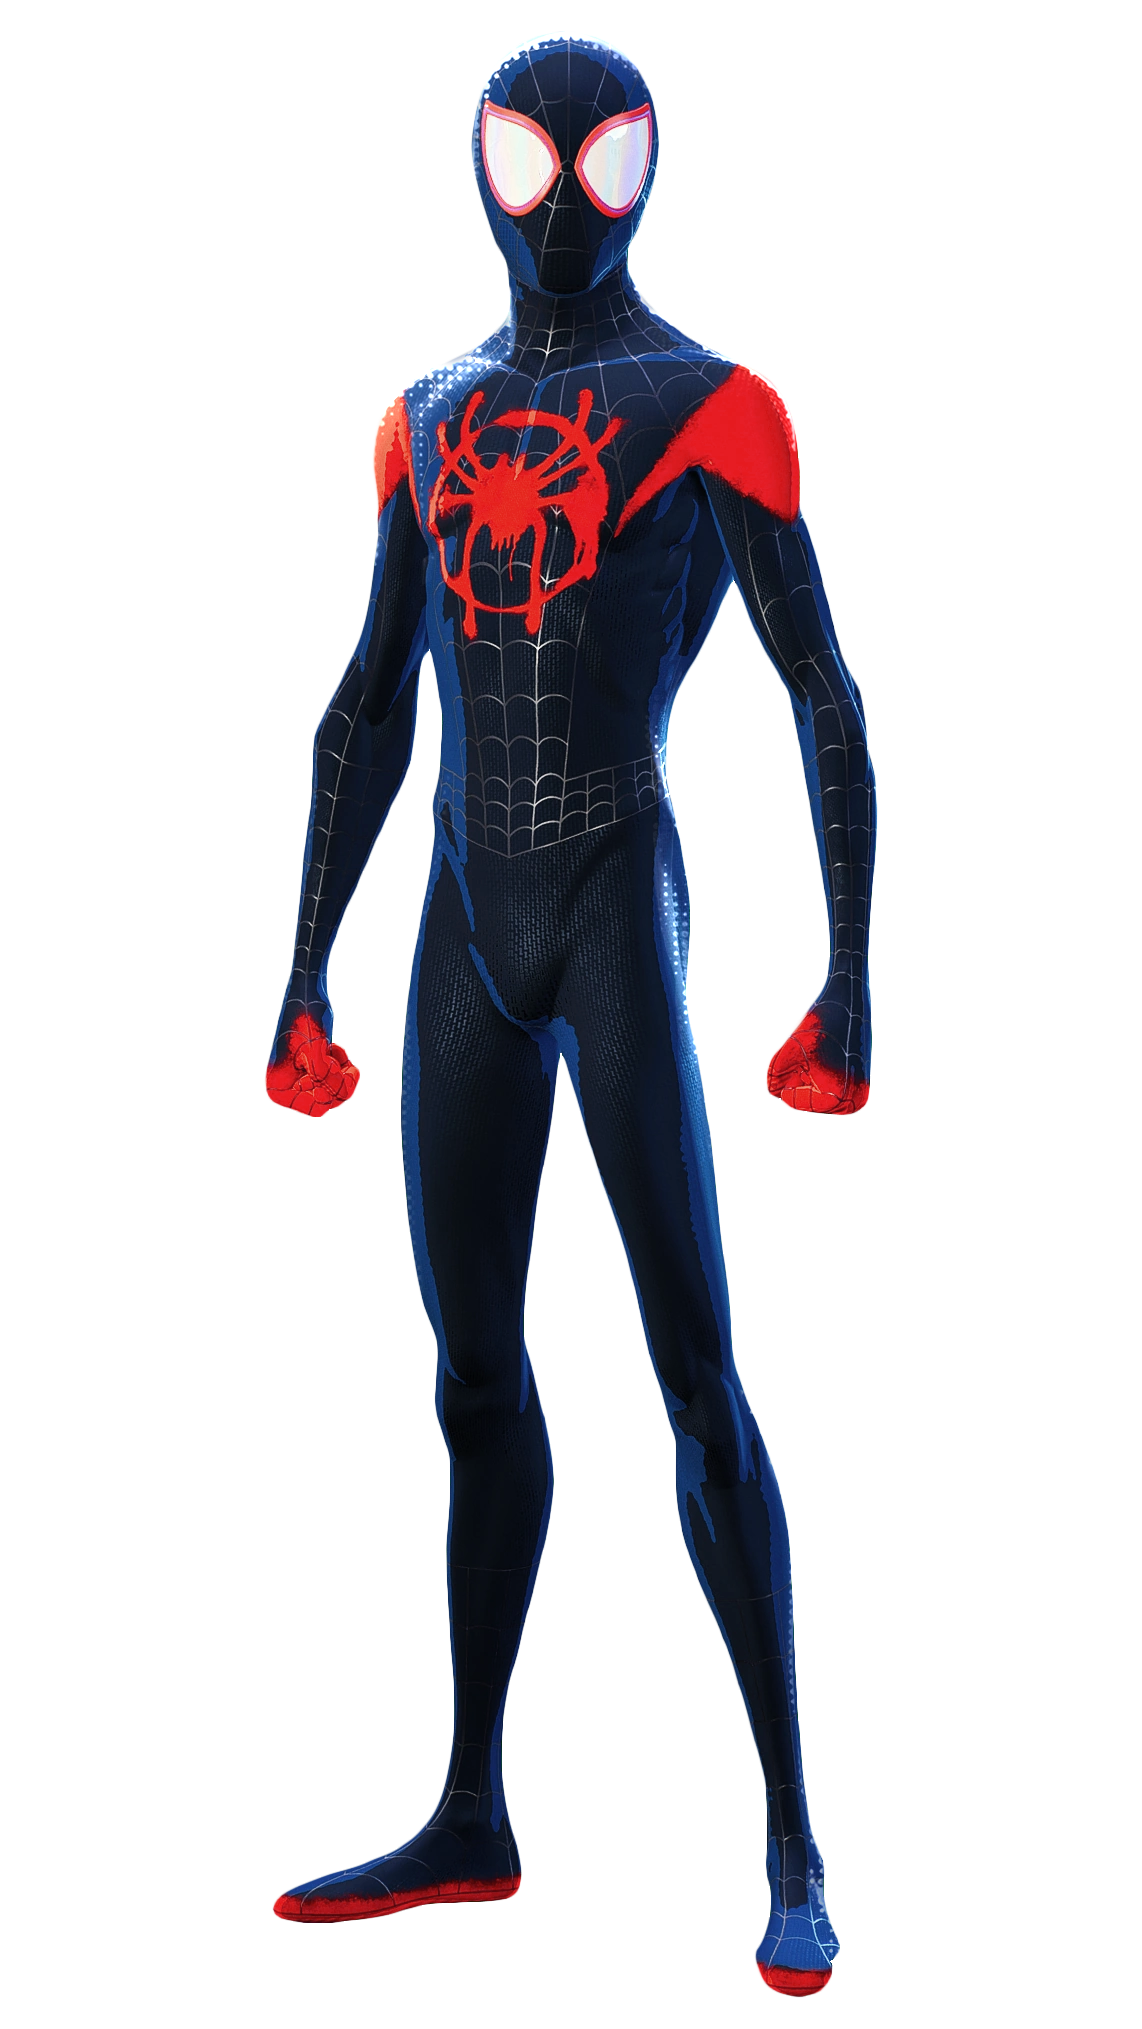 Category:Gadgets in Marvel's Spider-Man, Marvel's Spider-Man Wiki